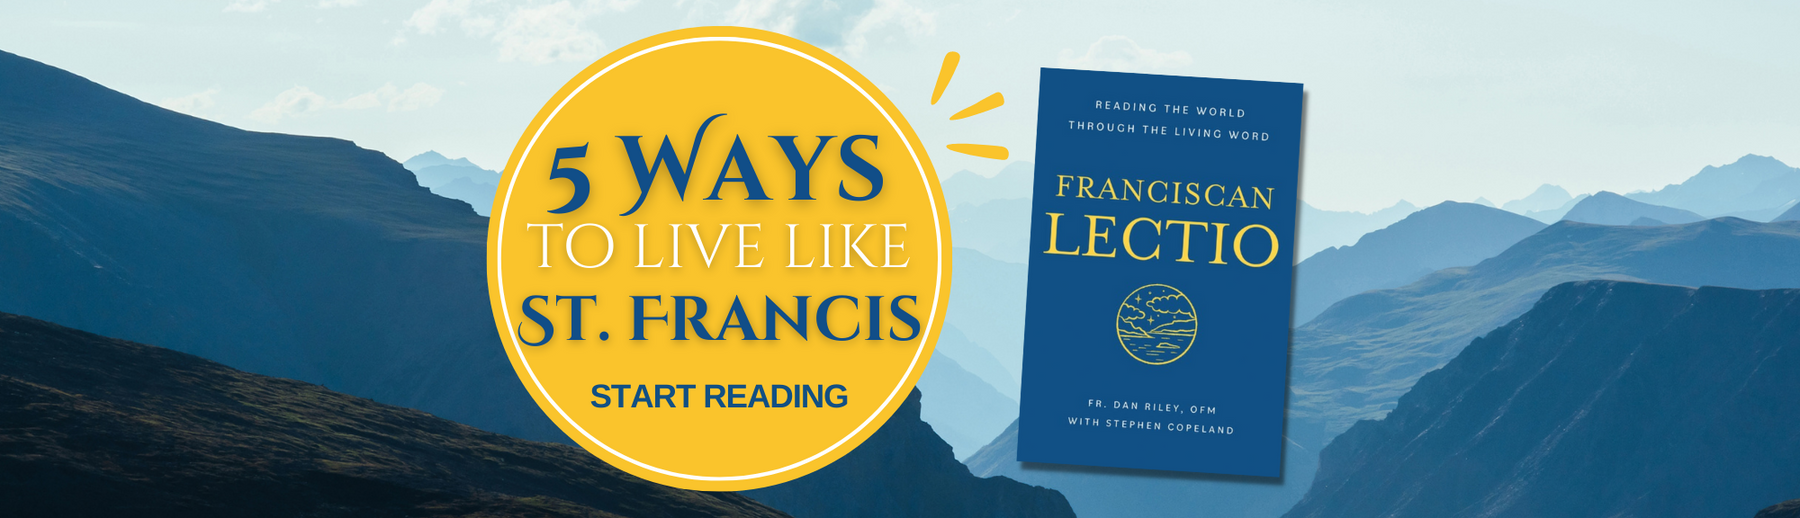 5 Ways to Live Like St. Francis